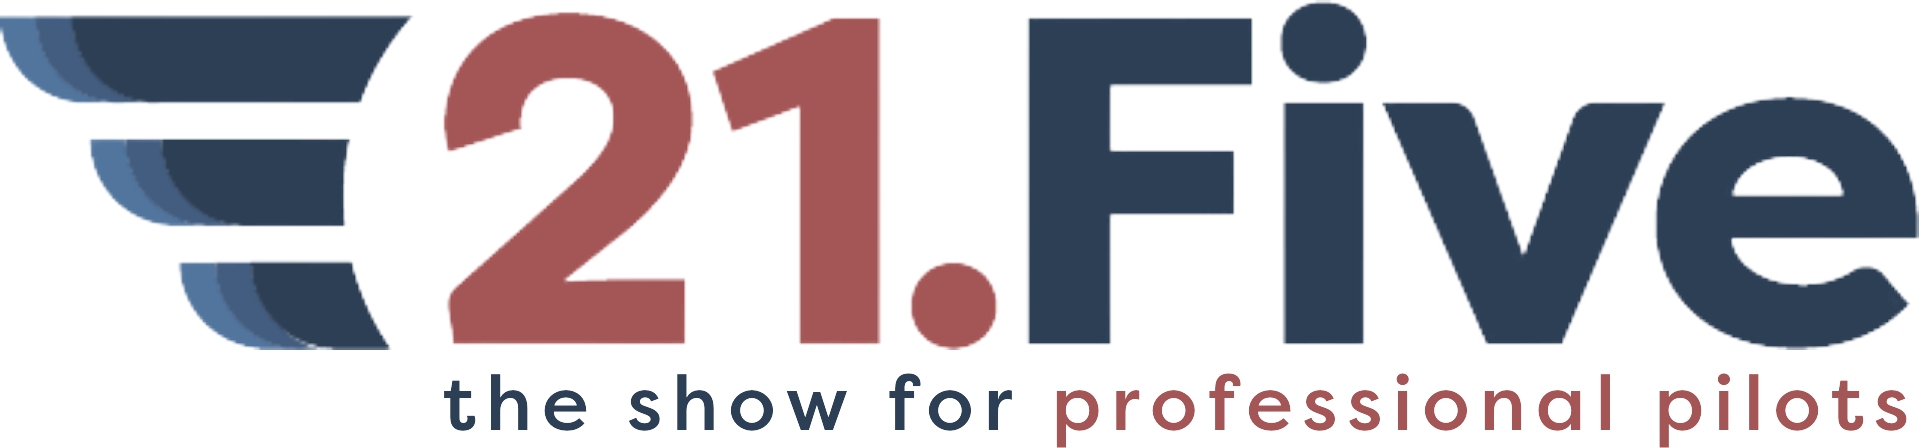 21F Wordmark Logo